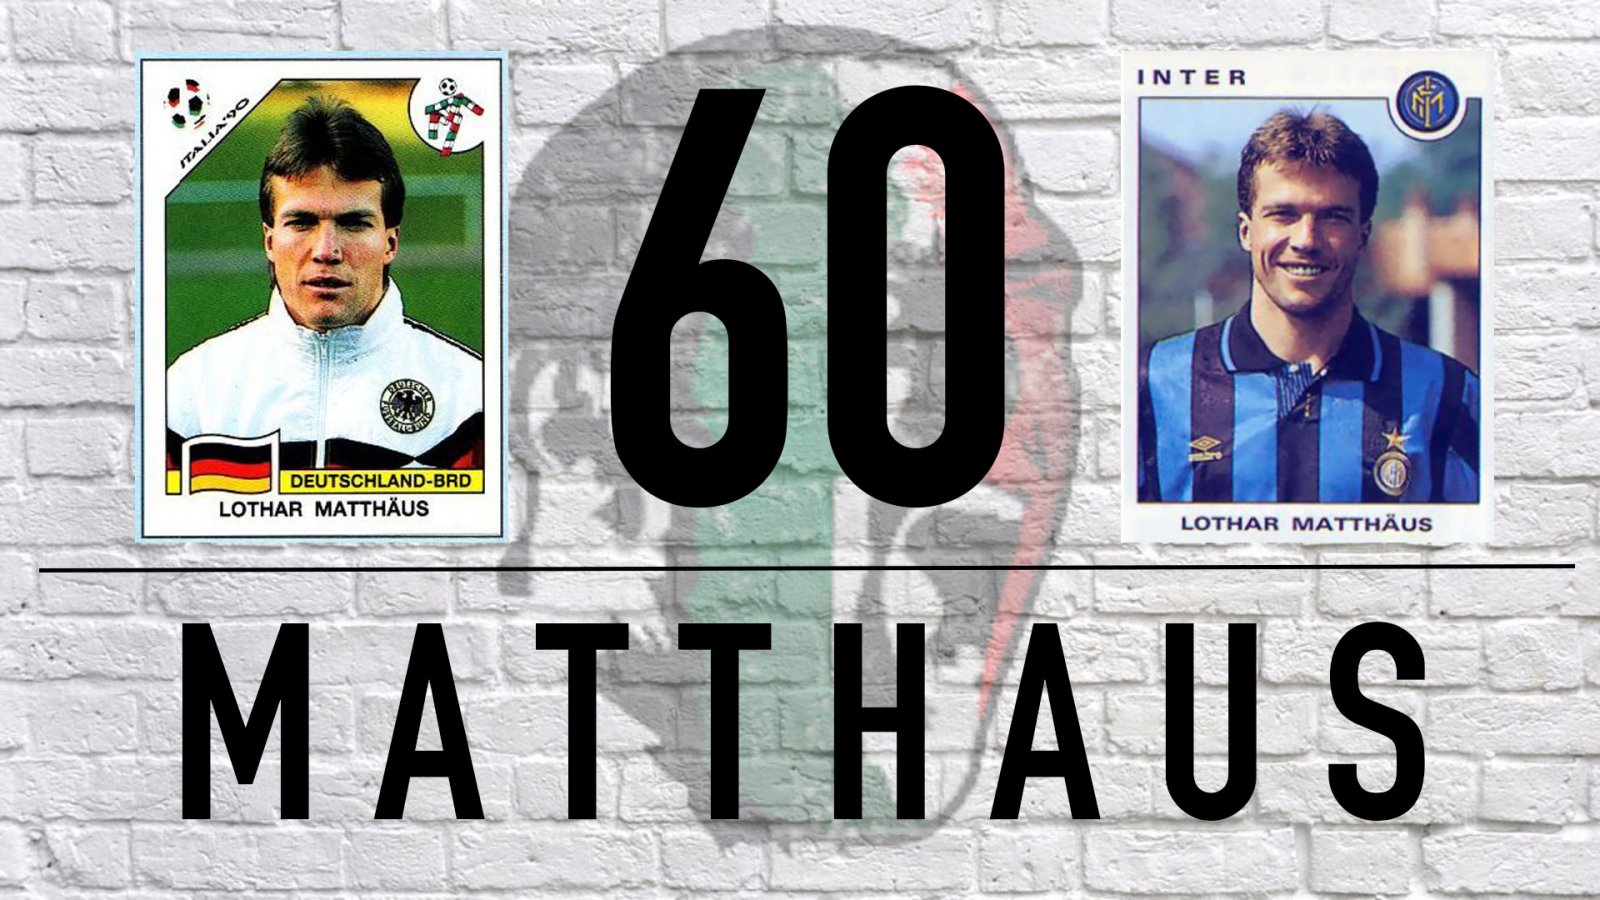 Matthaus at 60: The man who transformed Inter. Forza Italian Football